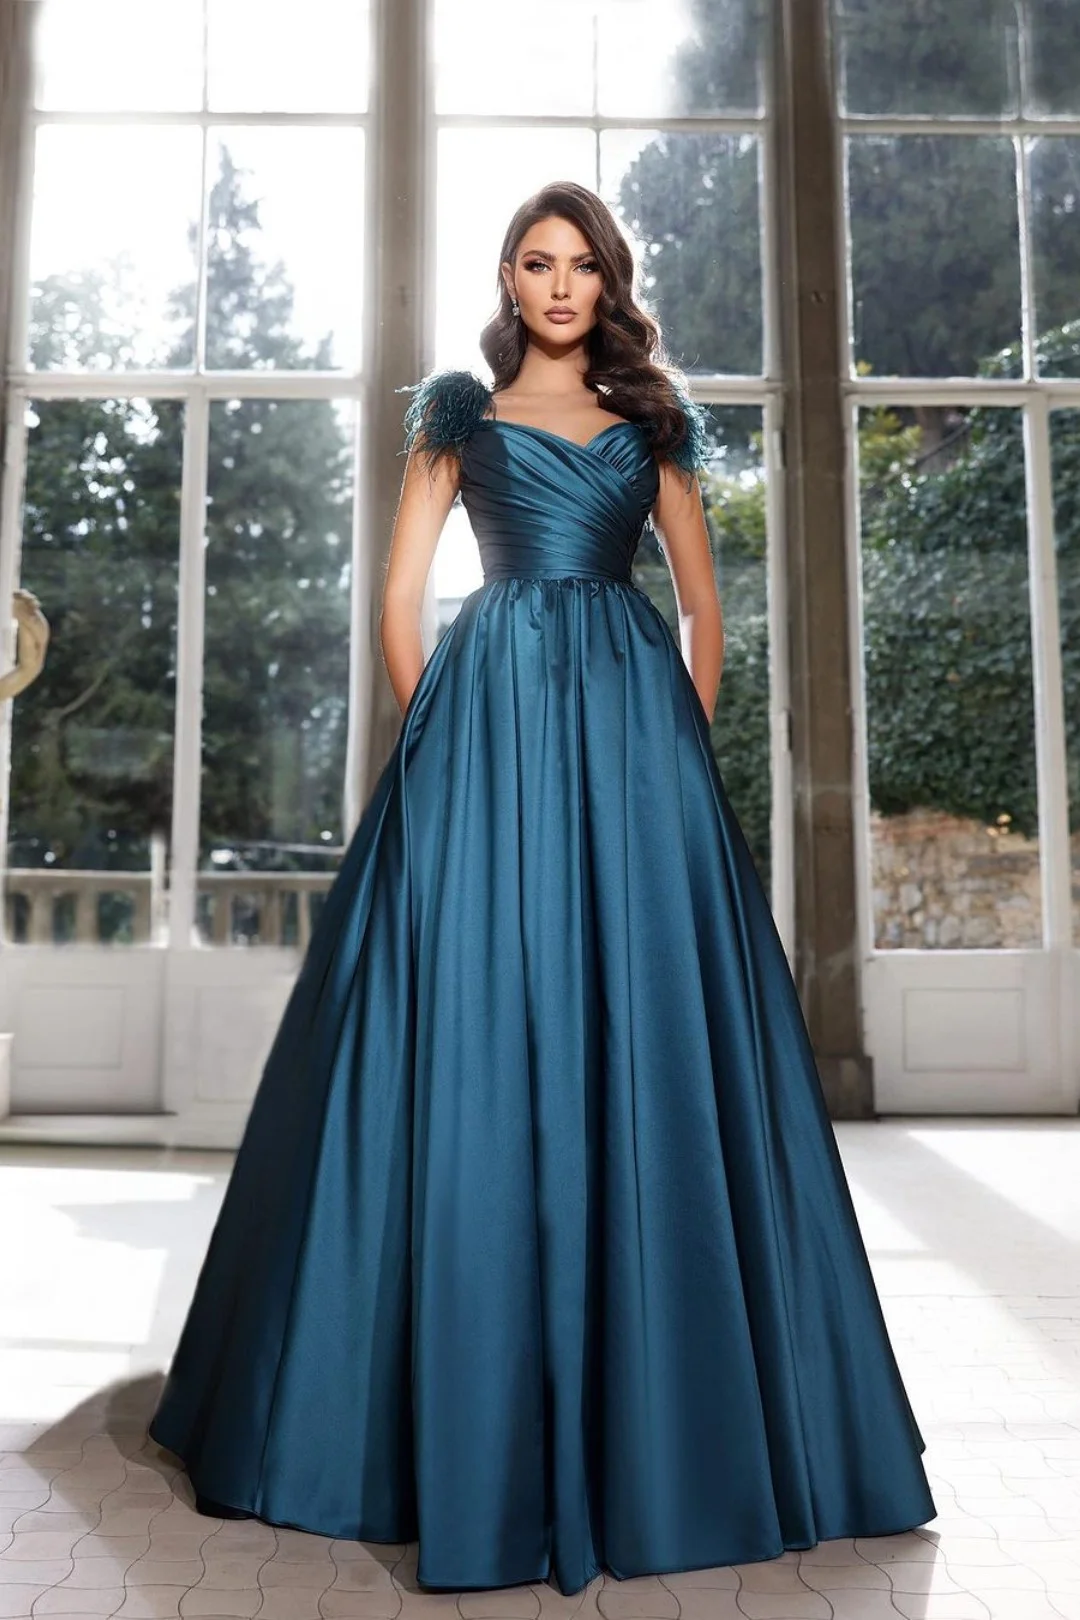 Tassel Prom Dress Dark Navy Sweetheart Off-the-shoulder YL0284